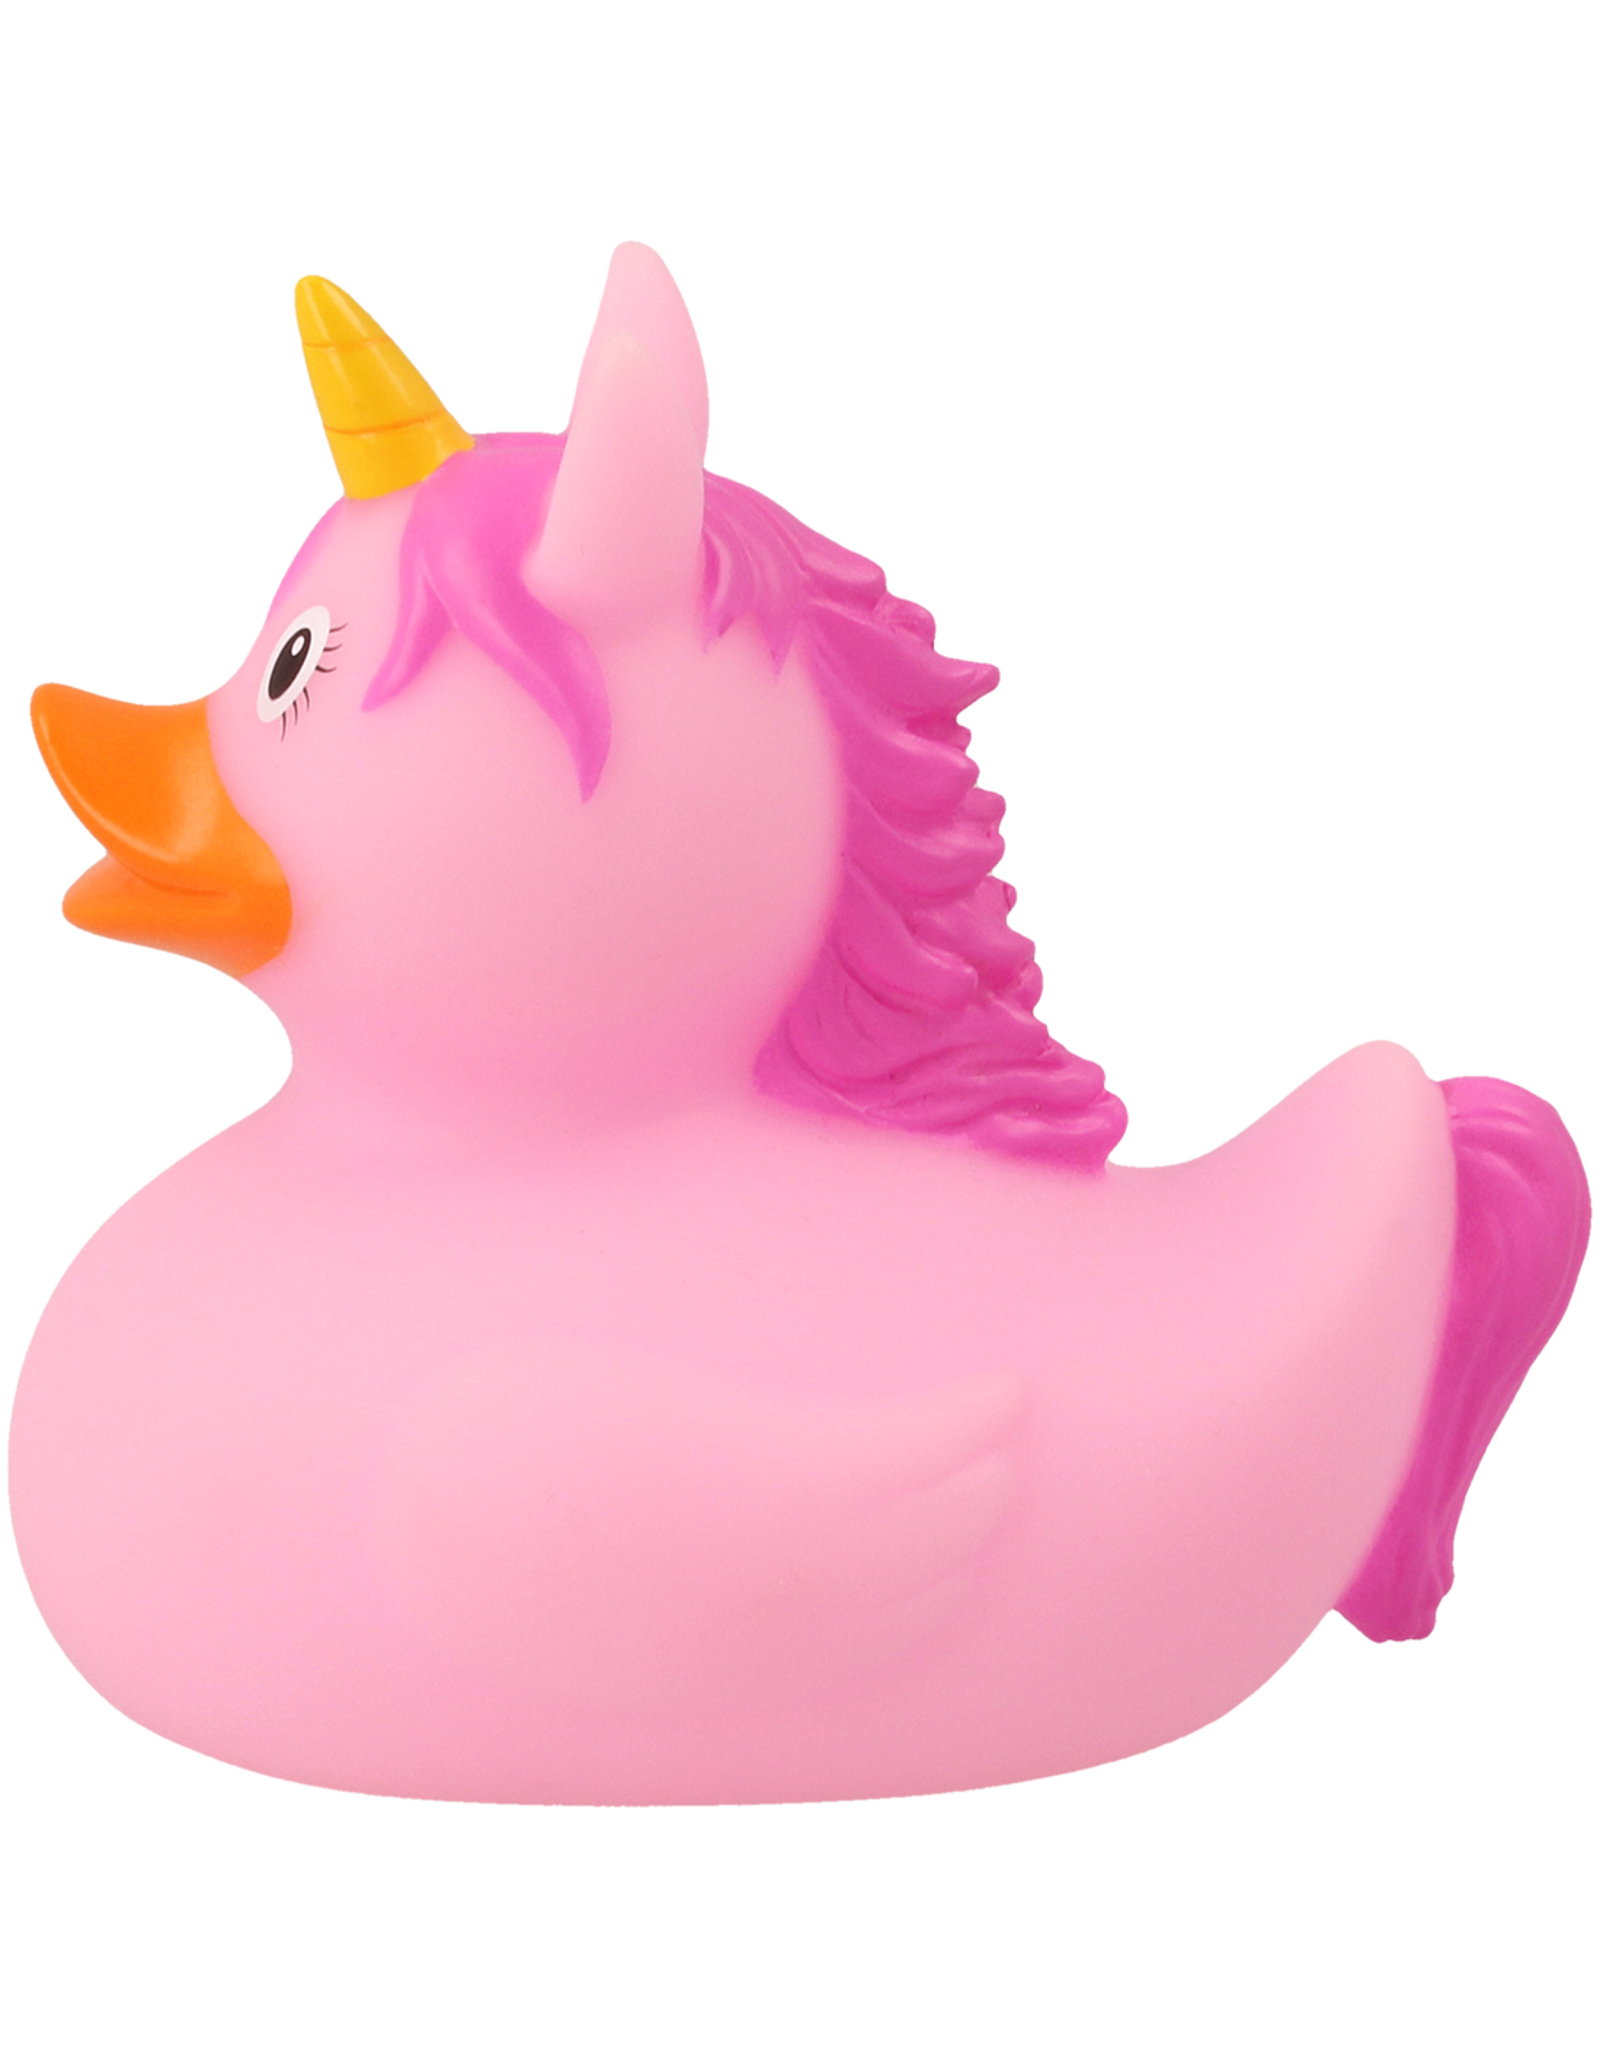 Lilalu Pink Unicorn Rubber Duck